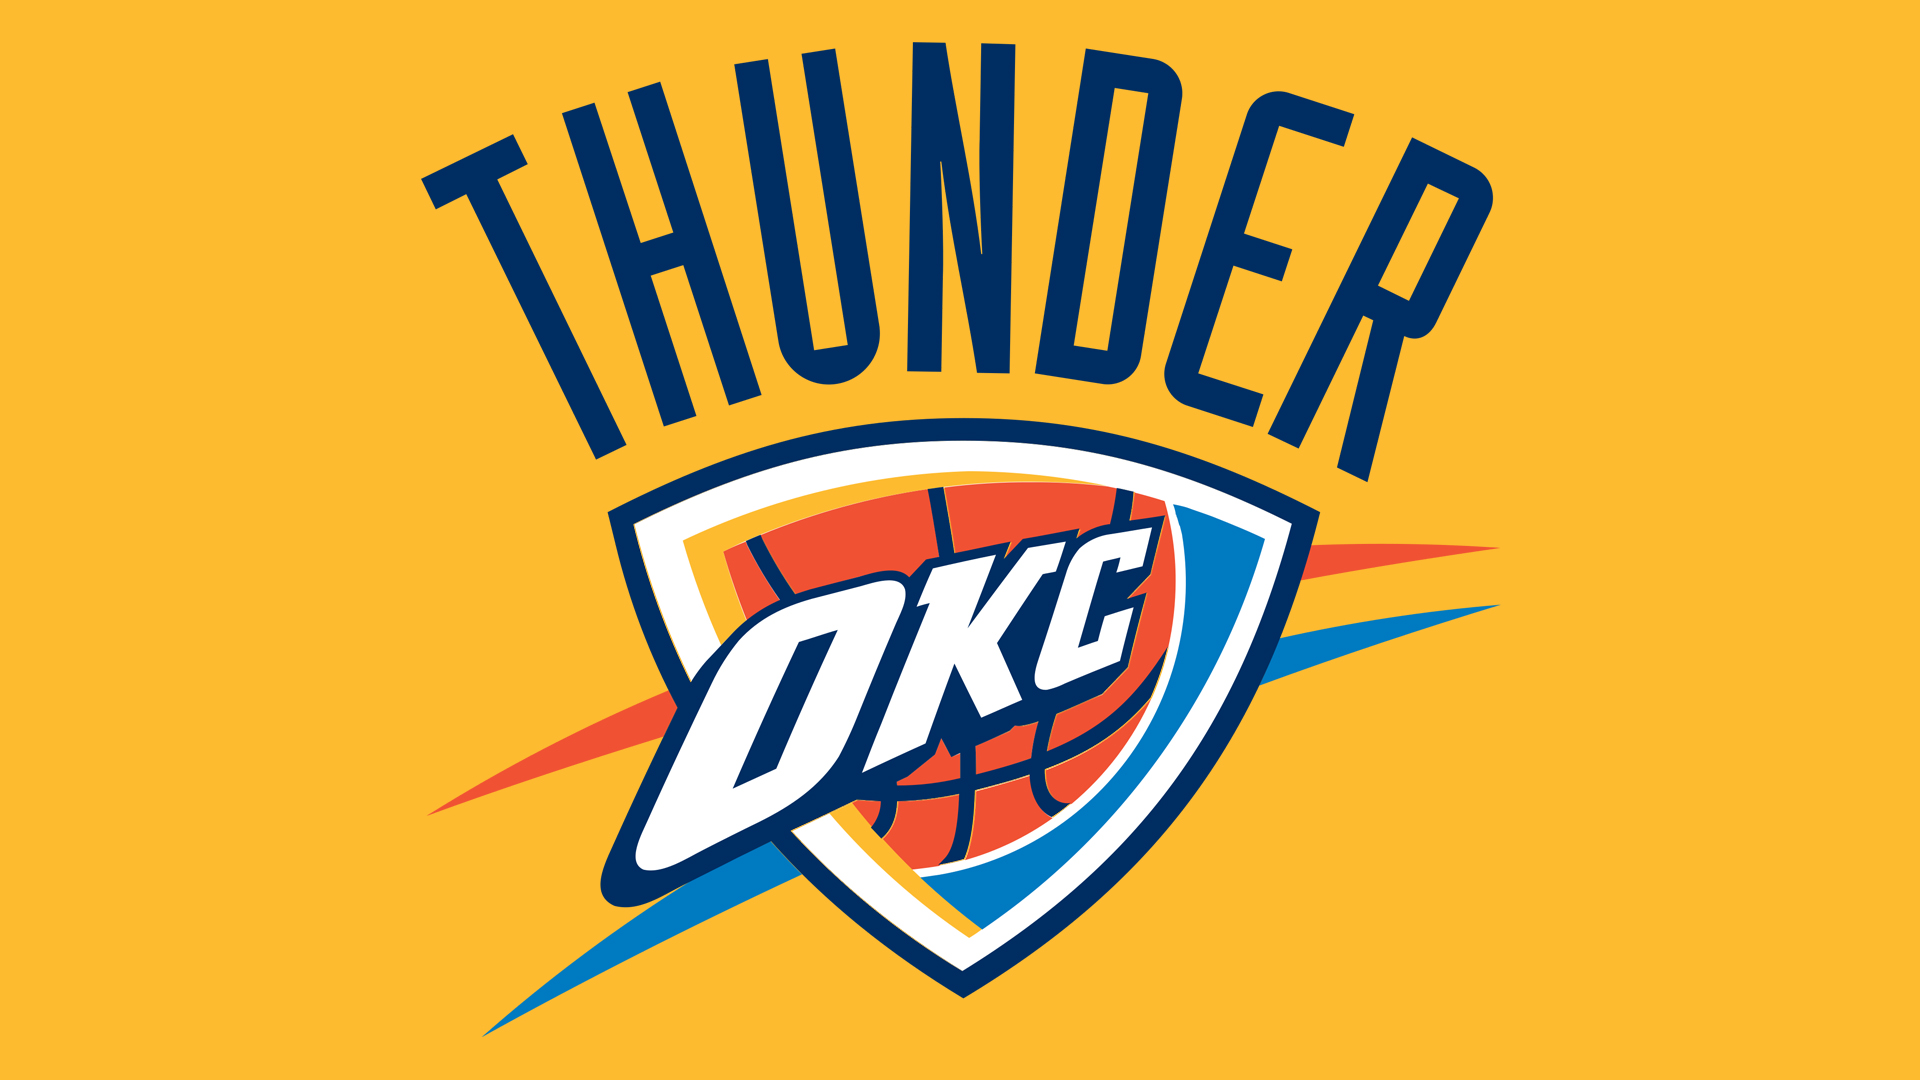 Best Oklahoma city thunder iPhone HD Wallpapers  iLikeWallpaper